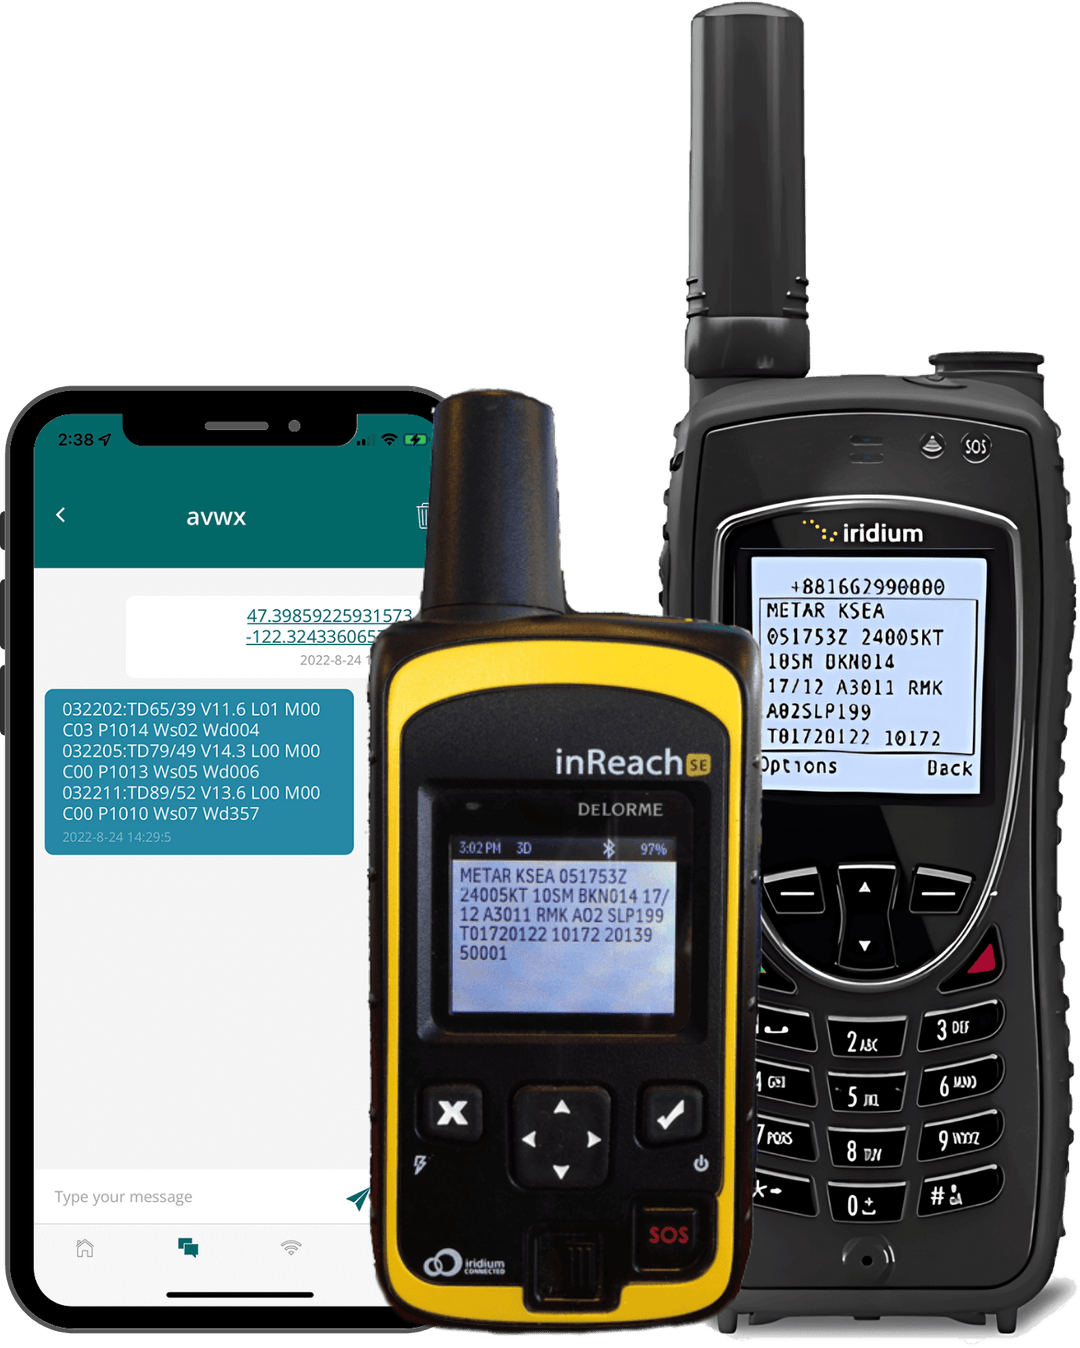 FlyCast message on smartphone, Iridium Extreme 9575 and inReach SE